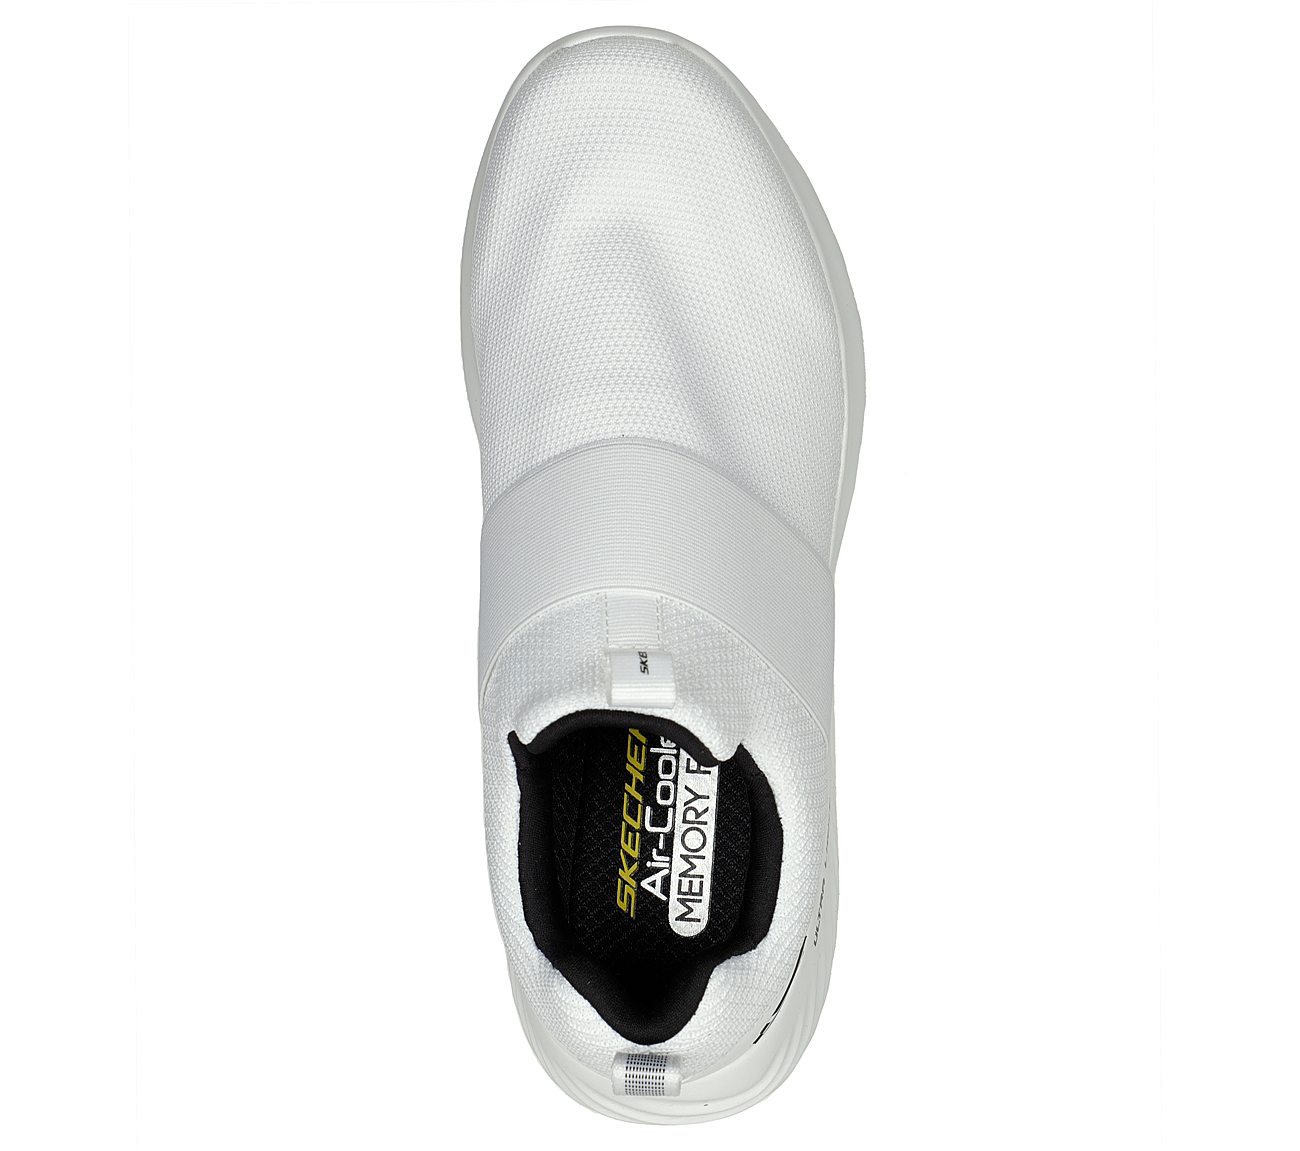 BOUNDER - INSHORE, WHITE BLACK Footwear Top View